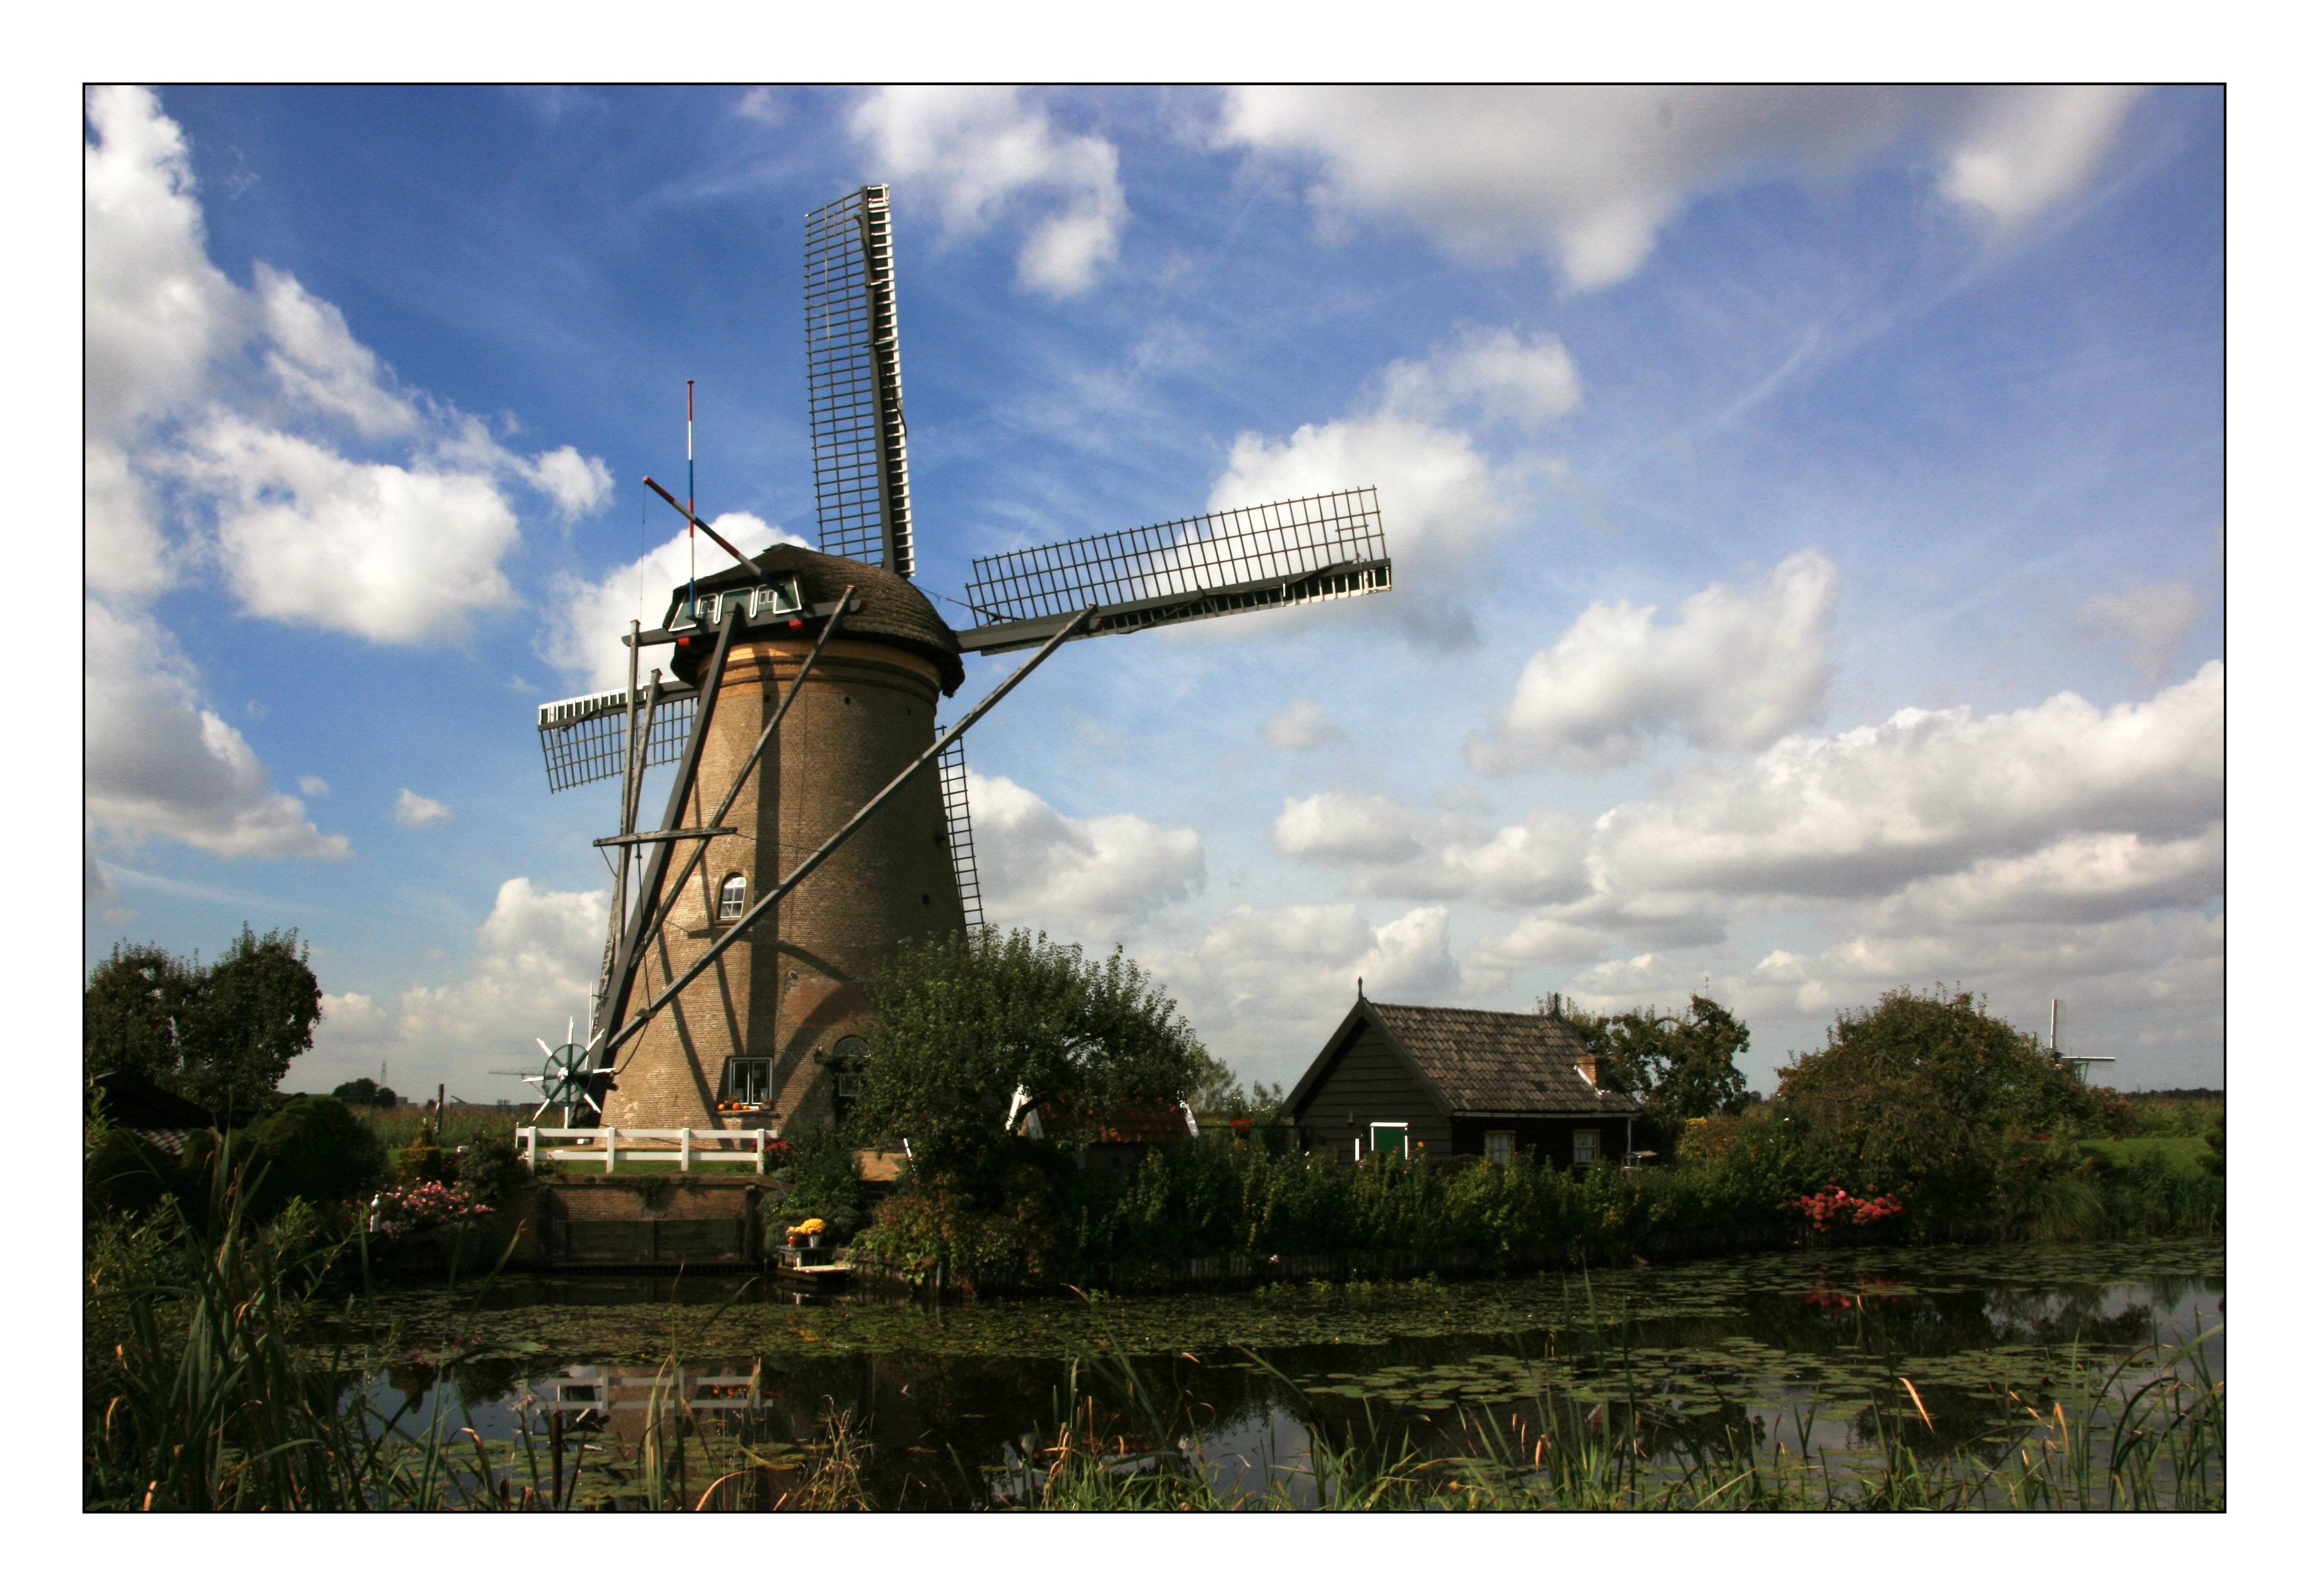 Windmill In Holland Slaza Wallpaper 4198x2902 px Free Download